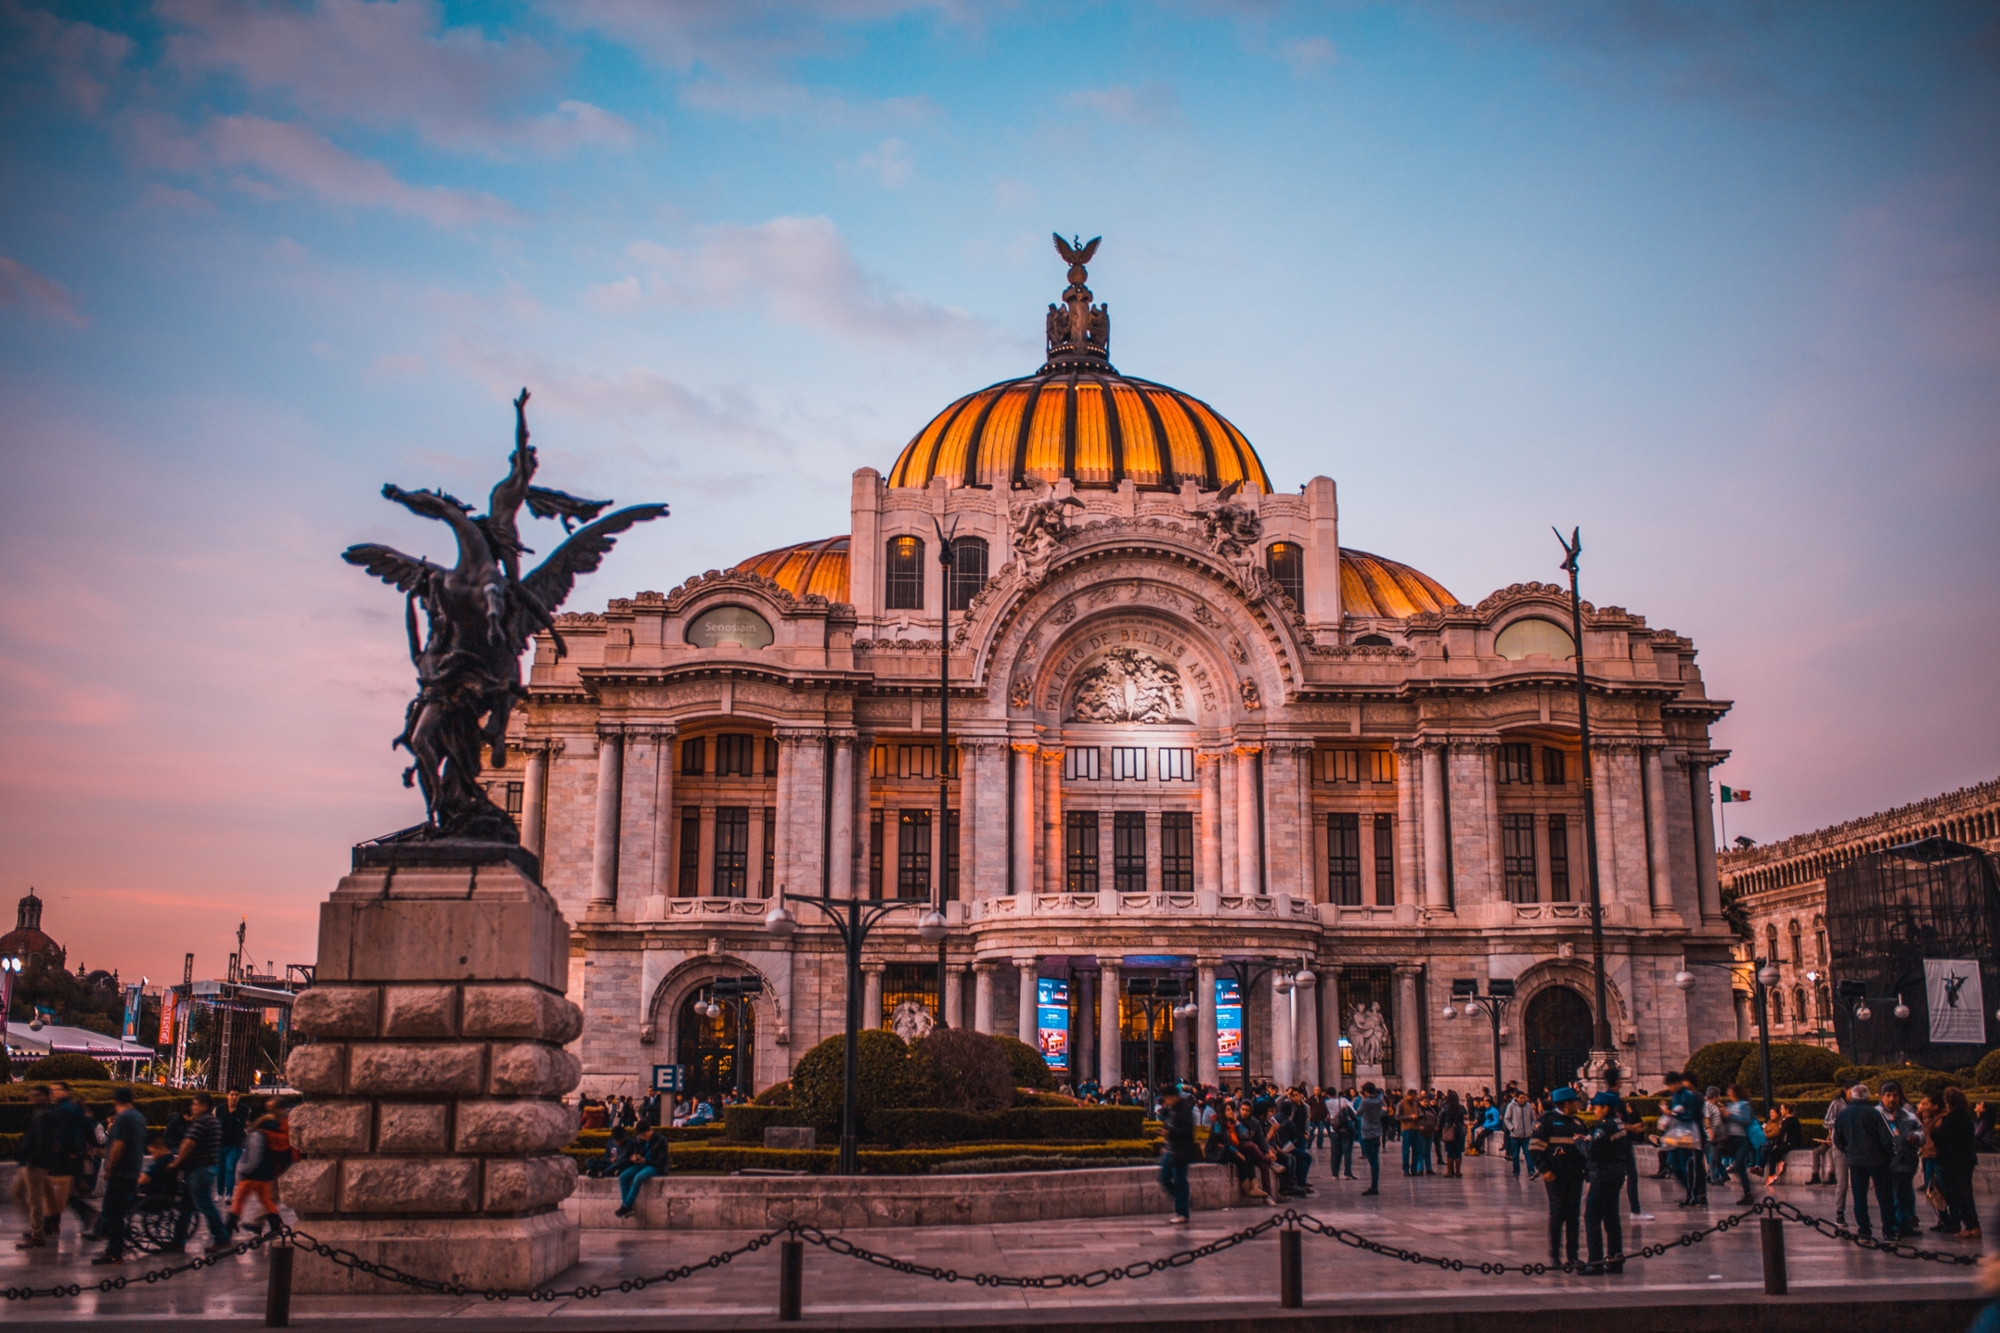 An image of the Palacio de Bellas Artes in Mexico City, Mexico